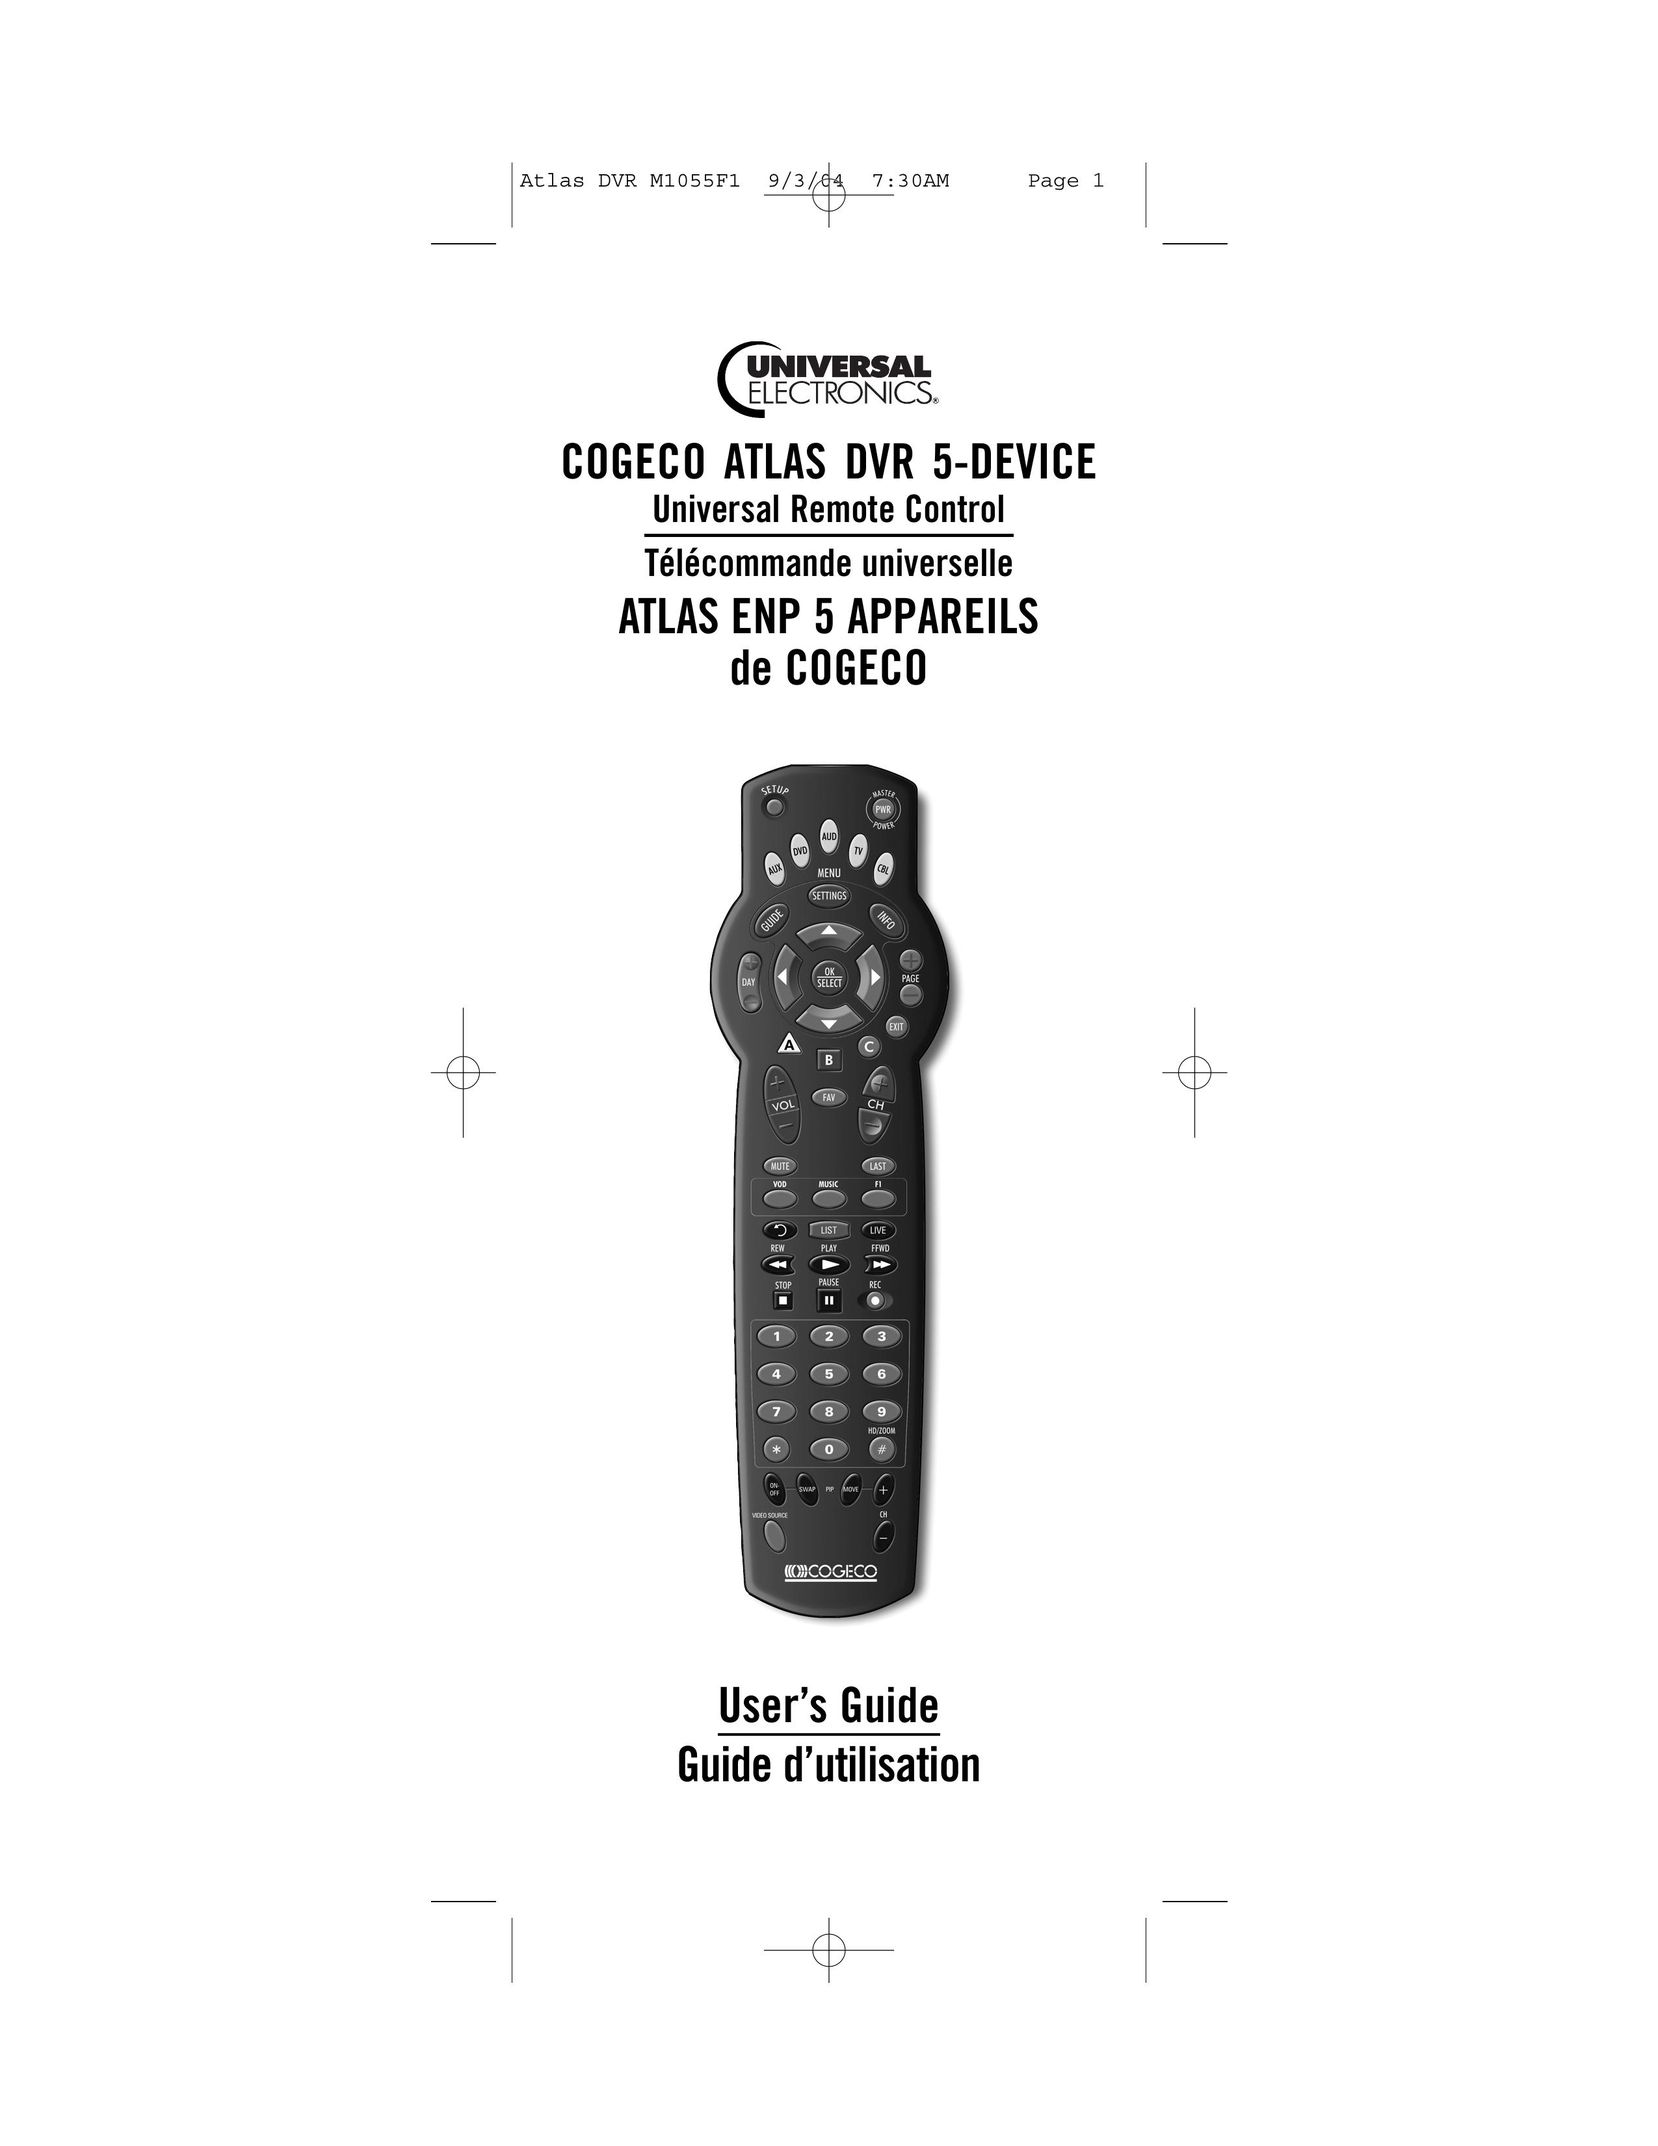 Universal Electronics DVR M1055F Universal Remote User Manual